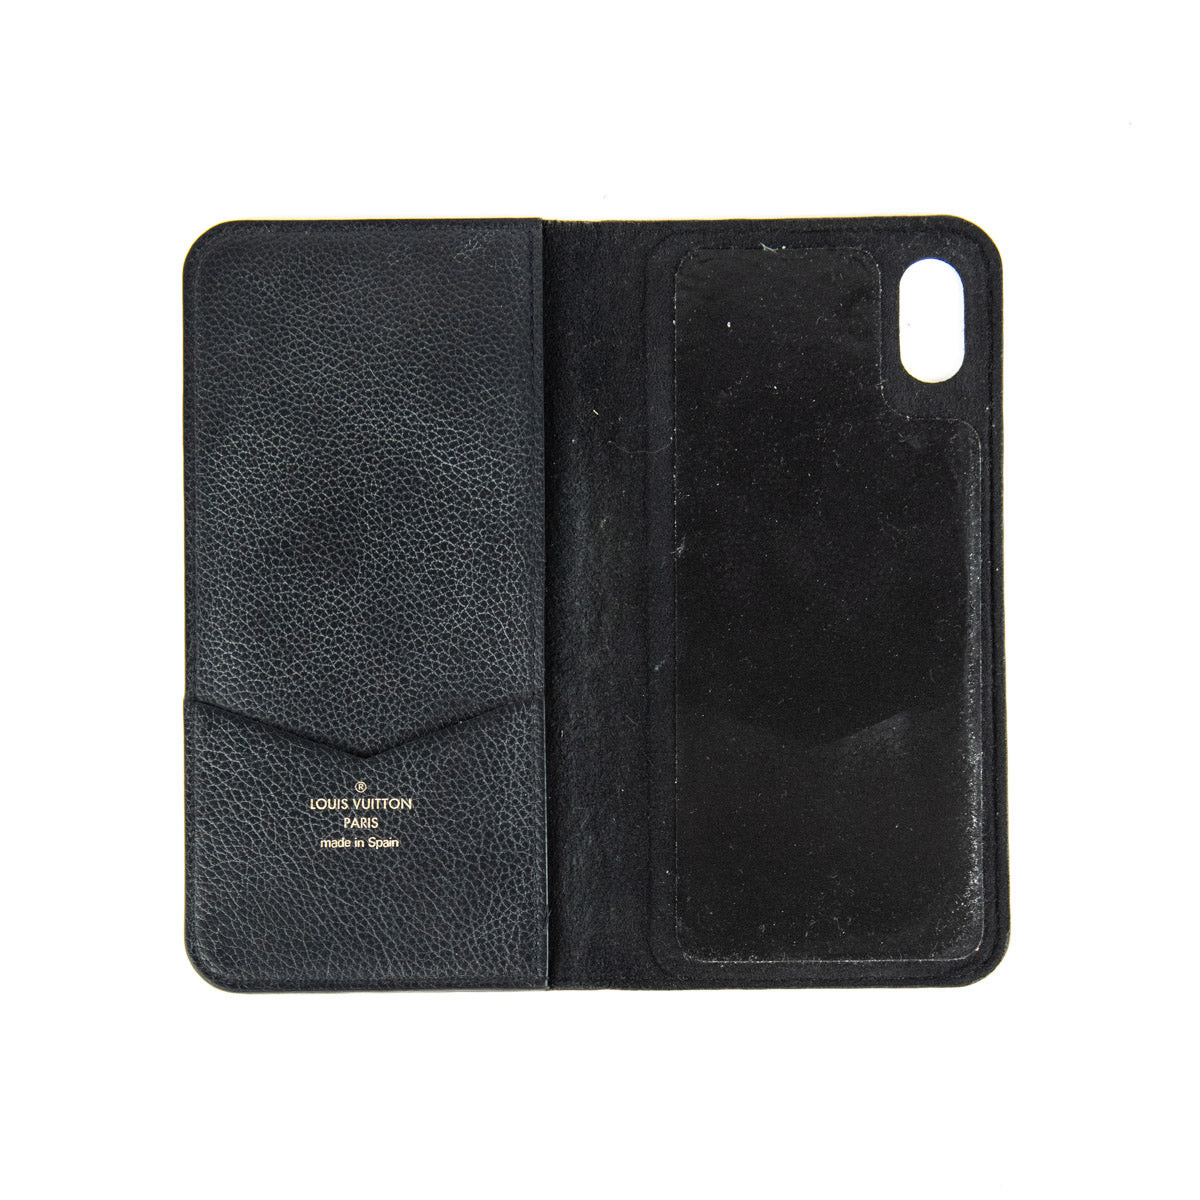 Louis Vuitton Black Empreinte Monogram iPhone X/XS Folio Case ...